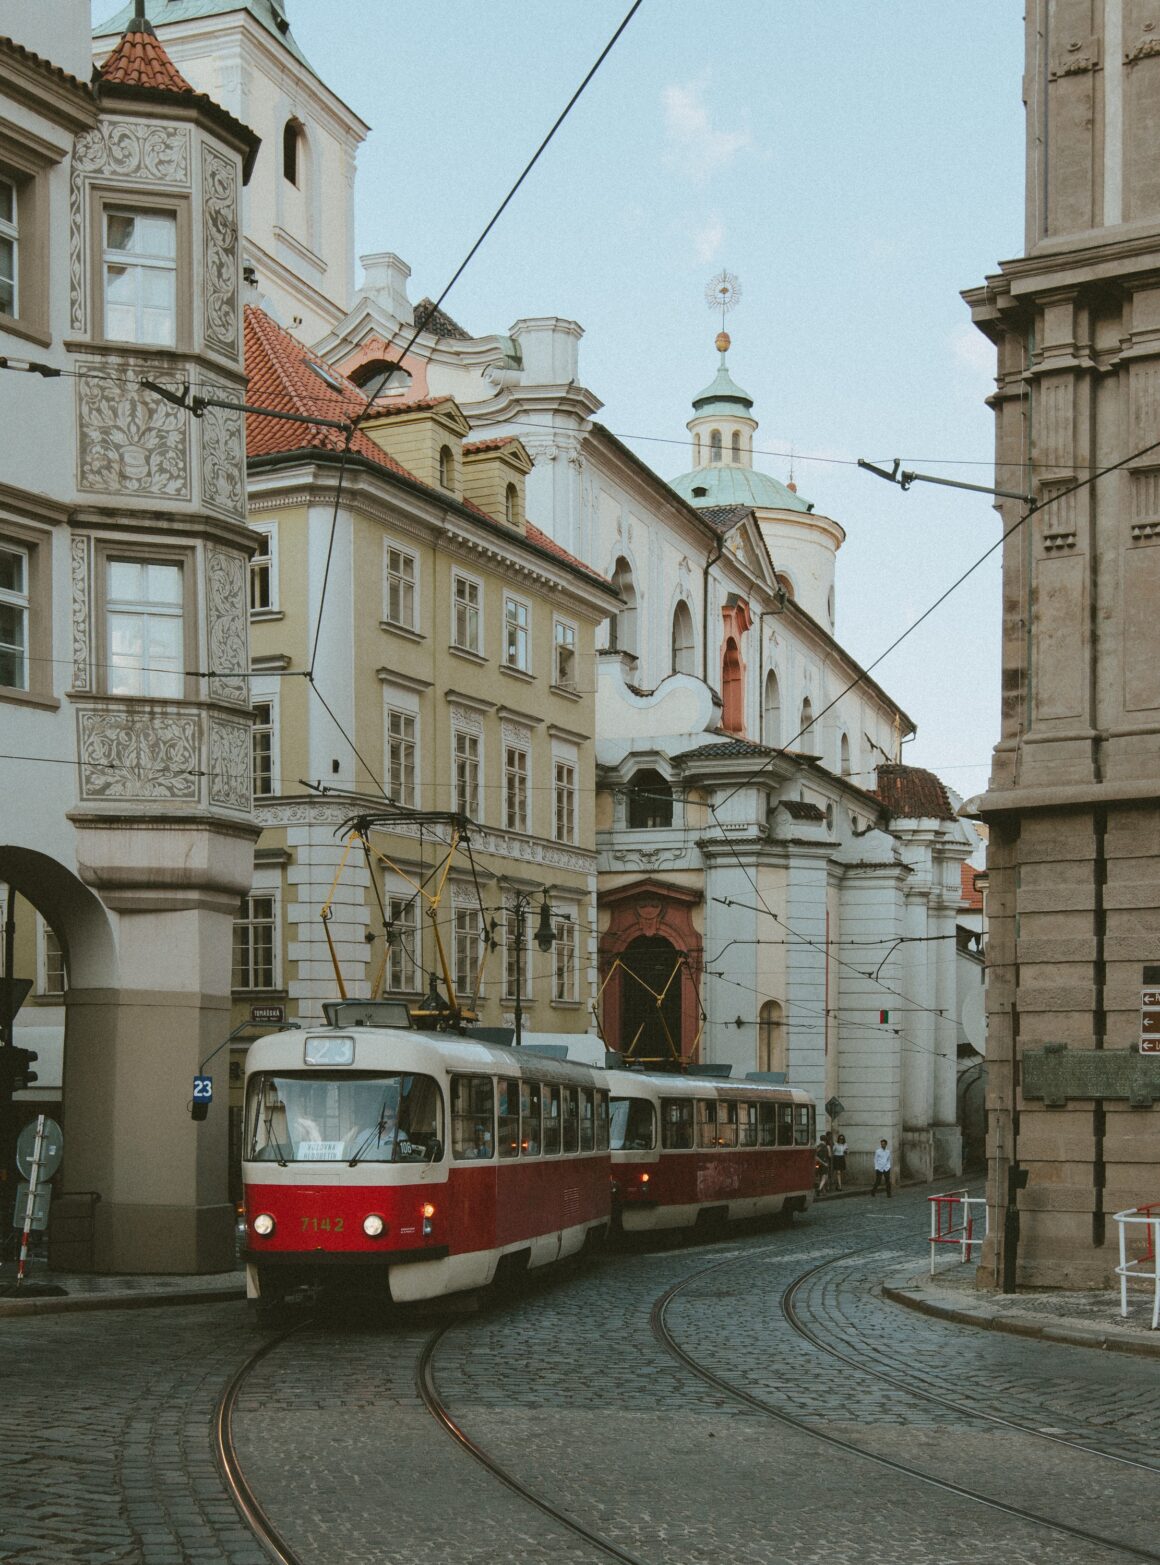 A tram goes through Prague's historical streets